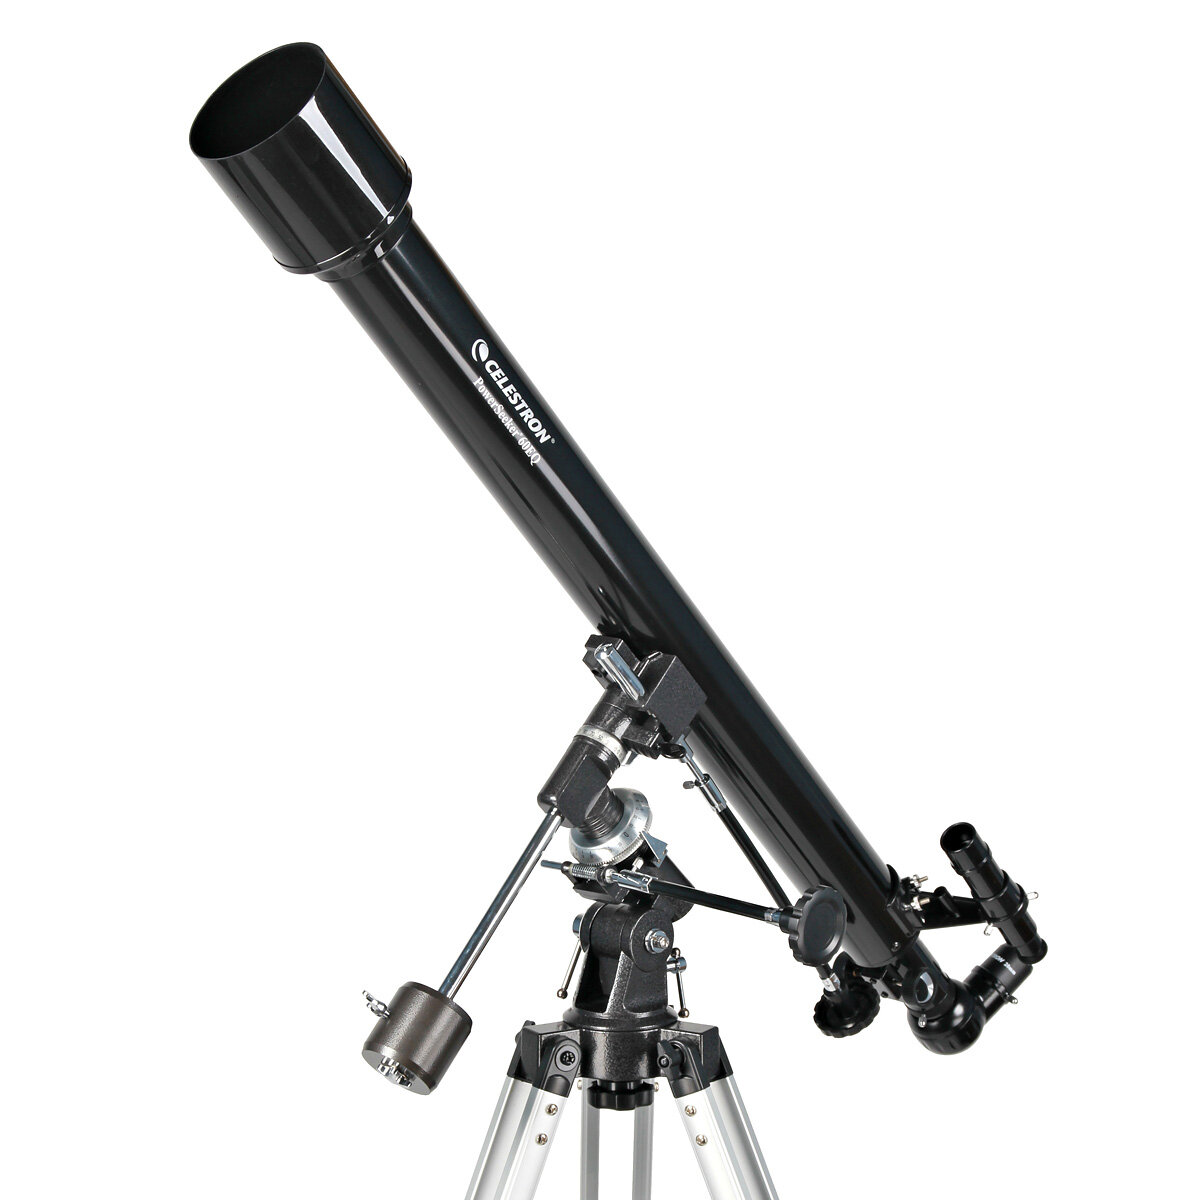 Teleskop Celestron 21043 PowerSeeker 60 EQ widoczny bokiem